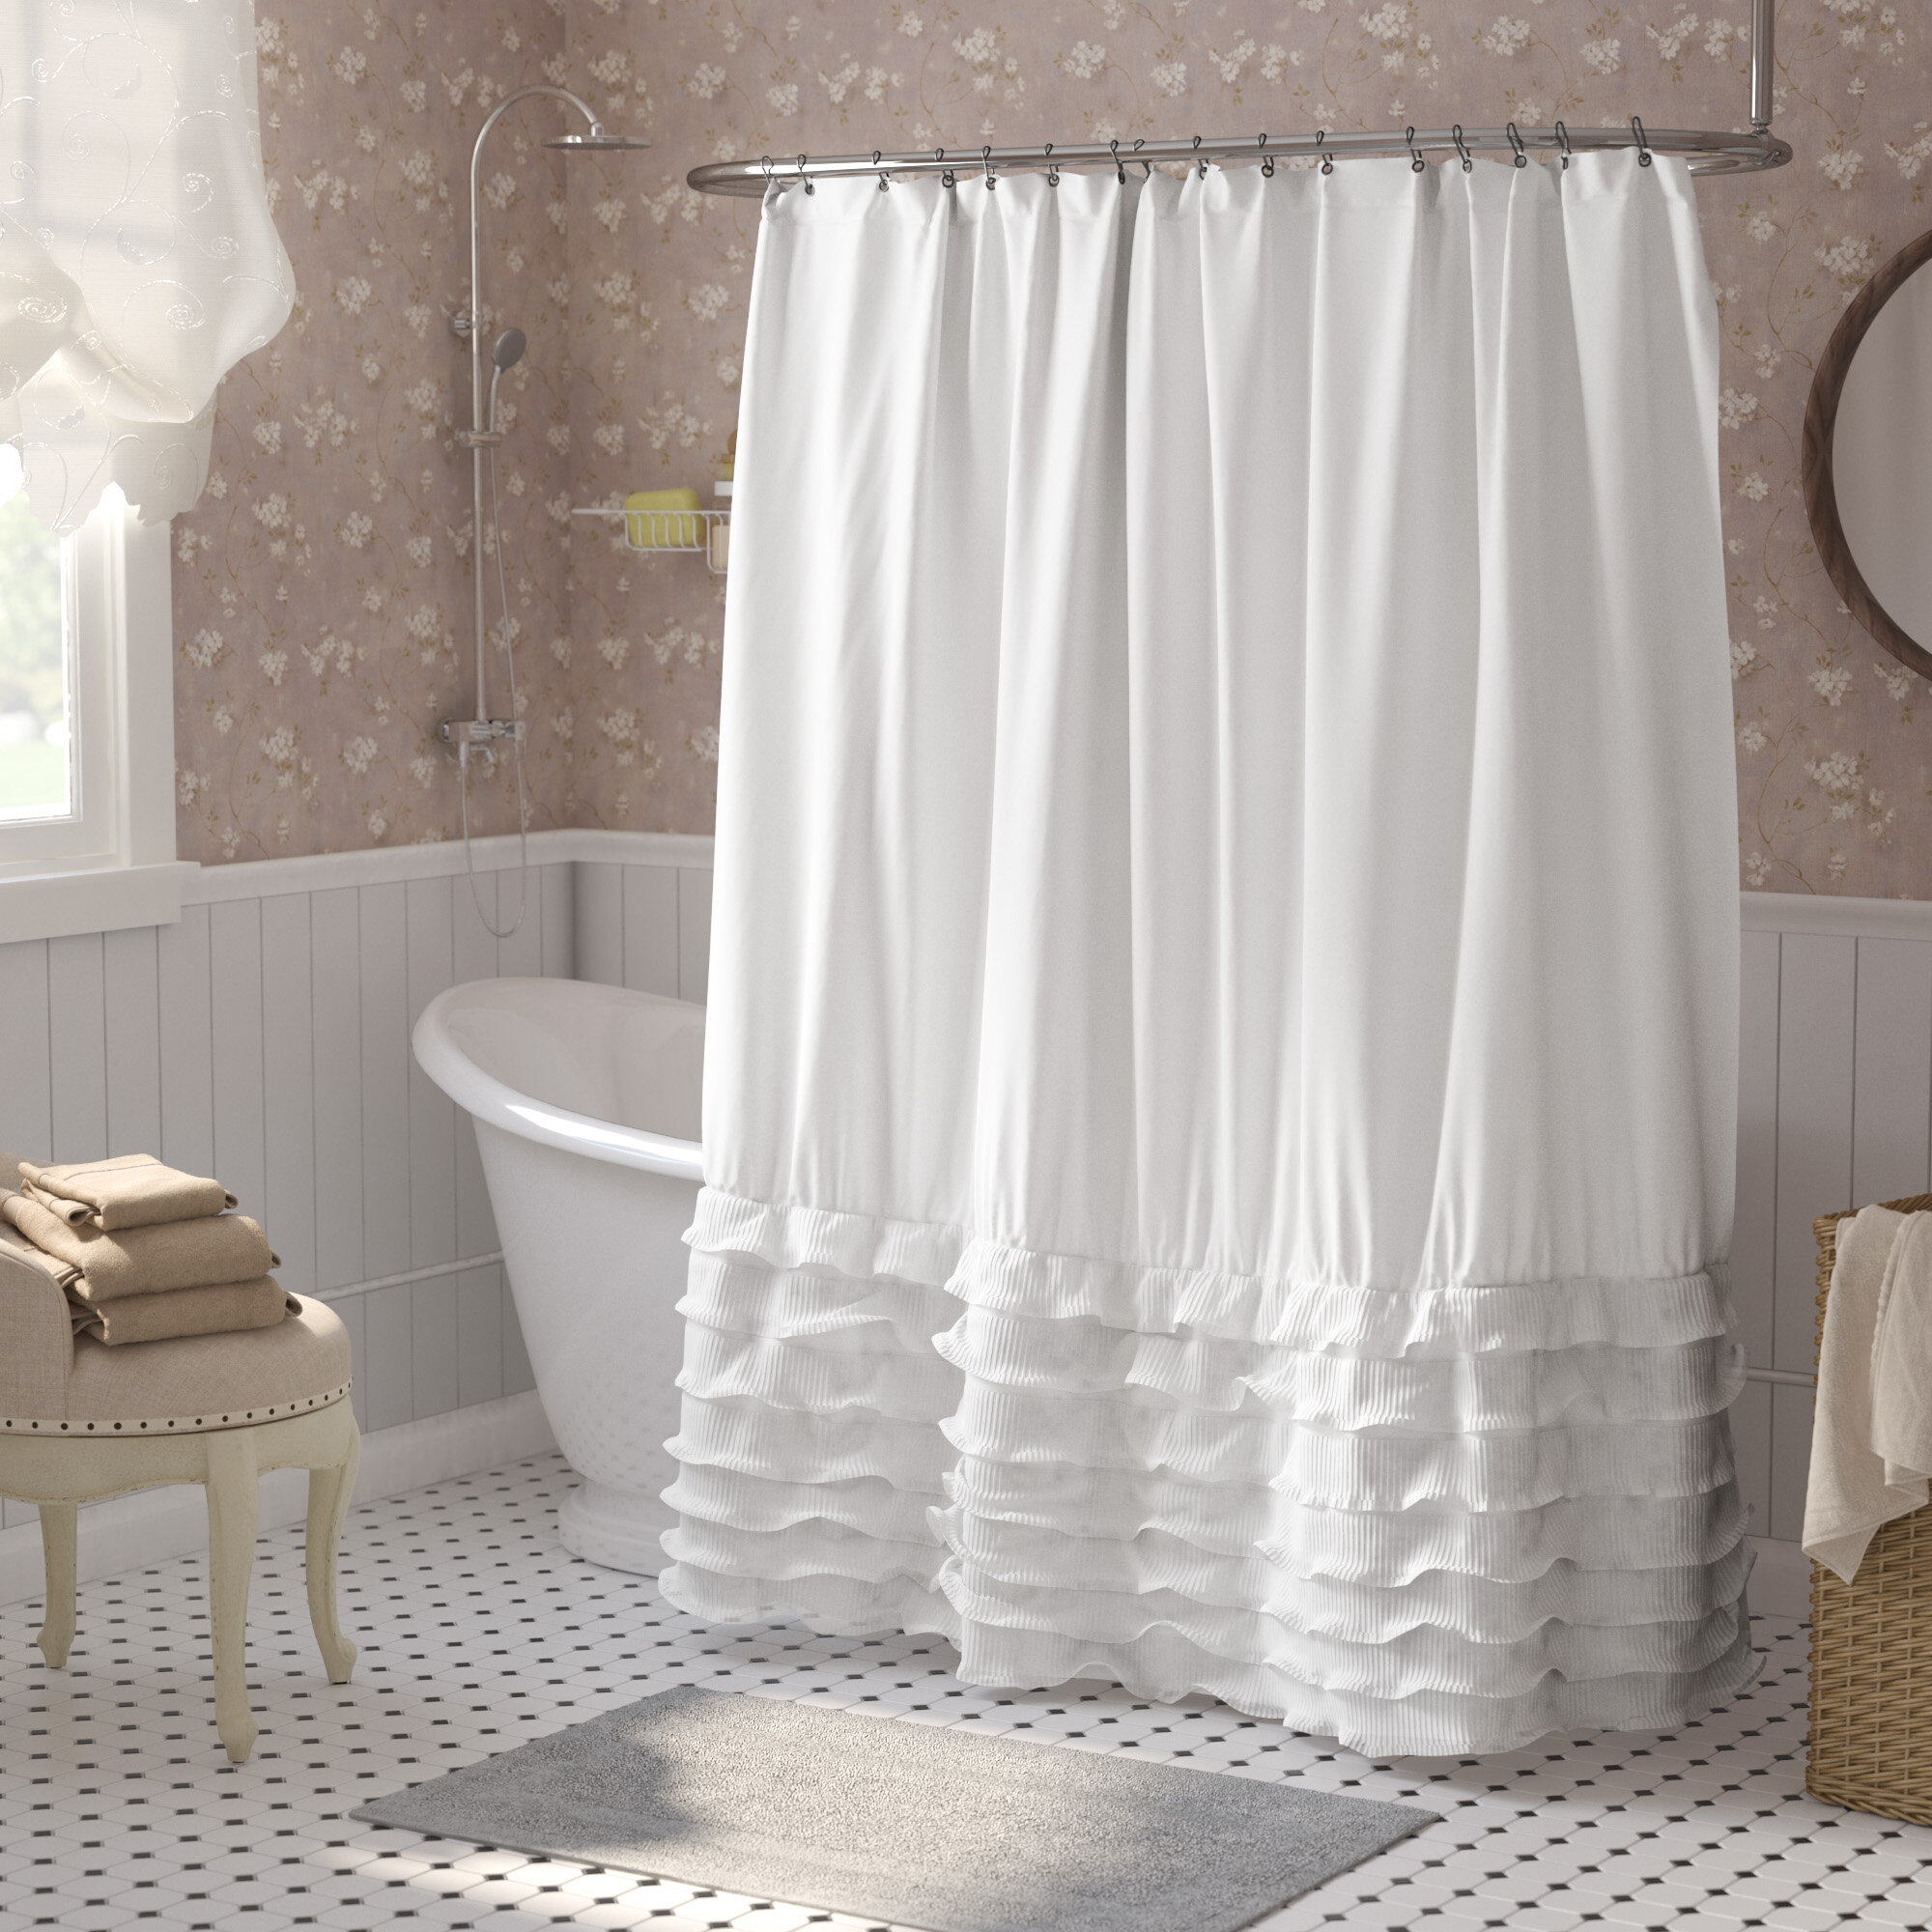 Clawfoot Tub Shower Curtain Visualhunt, Clawfoot Tub Shower Curtain Liner Solution